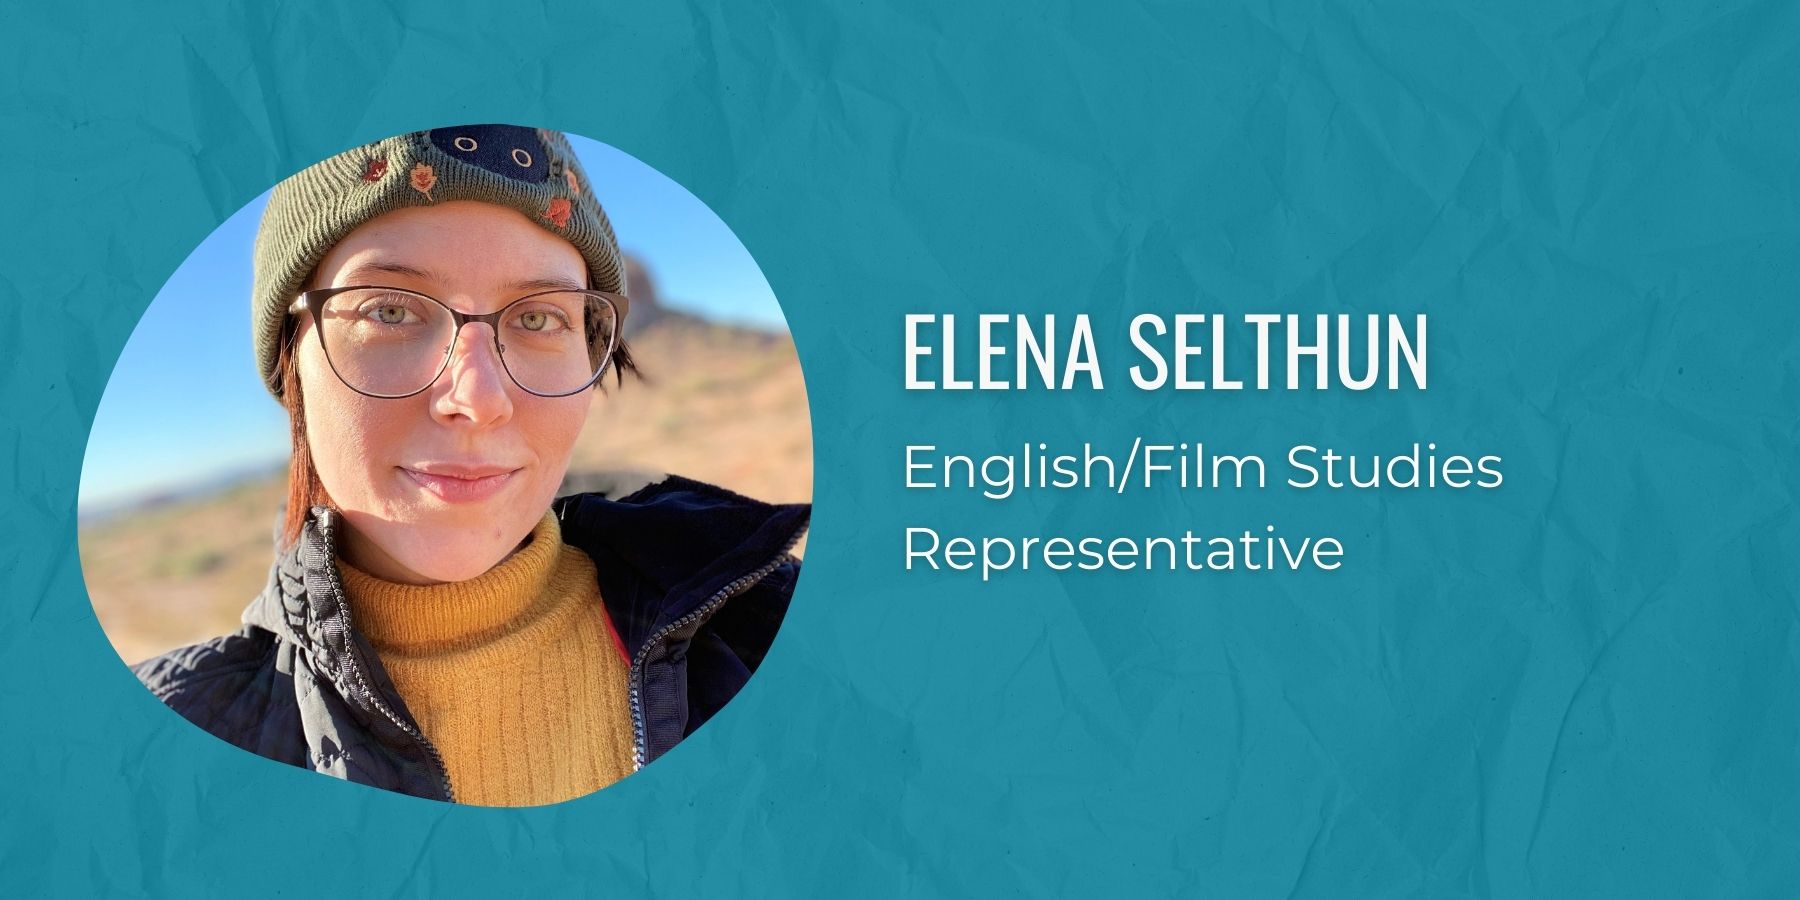 Photo of Elena Selthun and text: English/Film Studies Representative